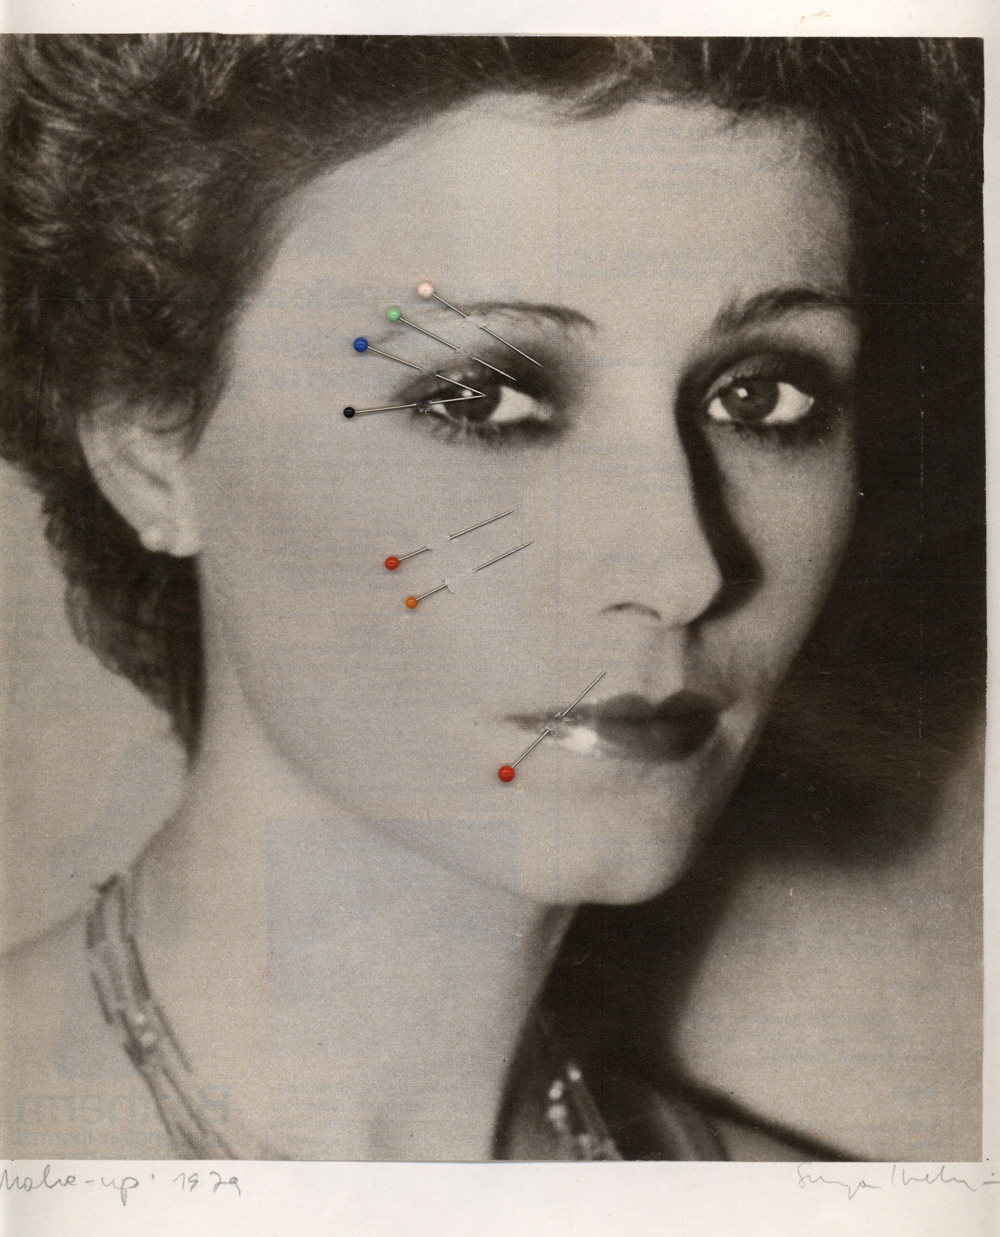 Sanja Iveković. Make-Up. 1979. Magazine page with map pins, 16 1/4 x 15″ (41.3 x 38.1 cm). Collection the artist. © 2011 Sanja Iveković